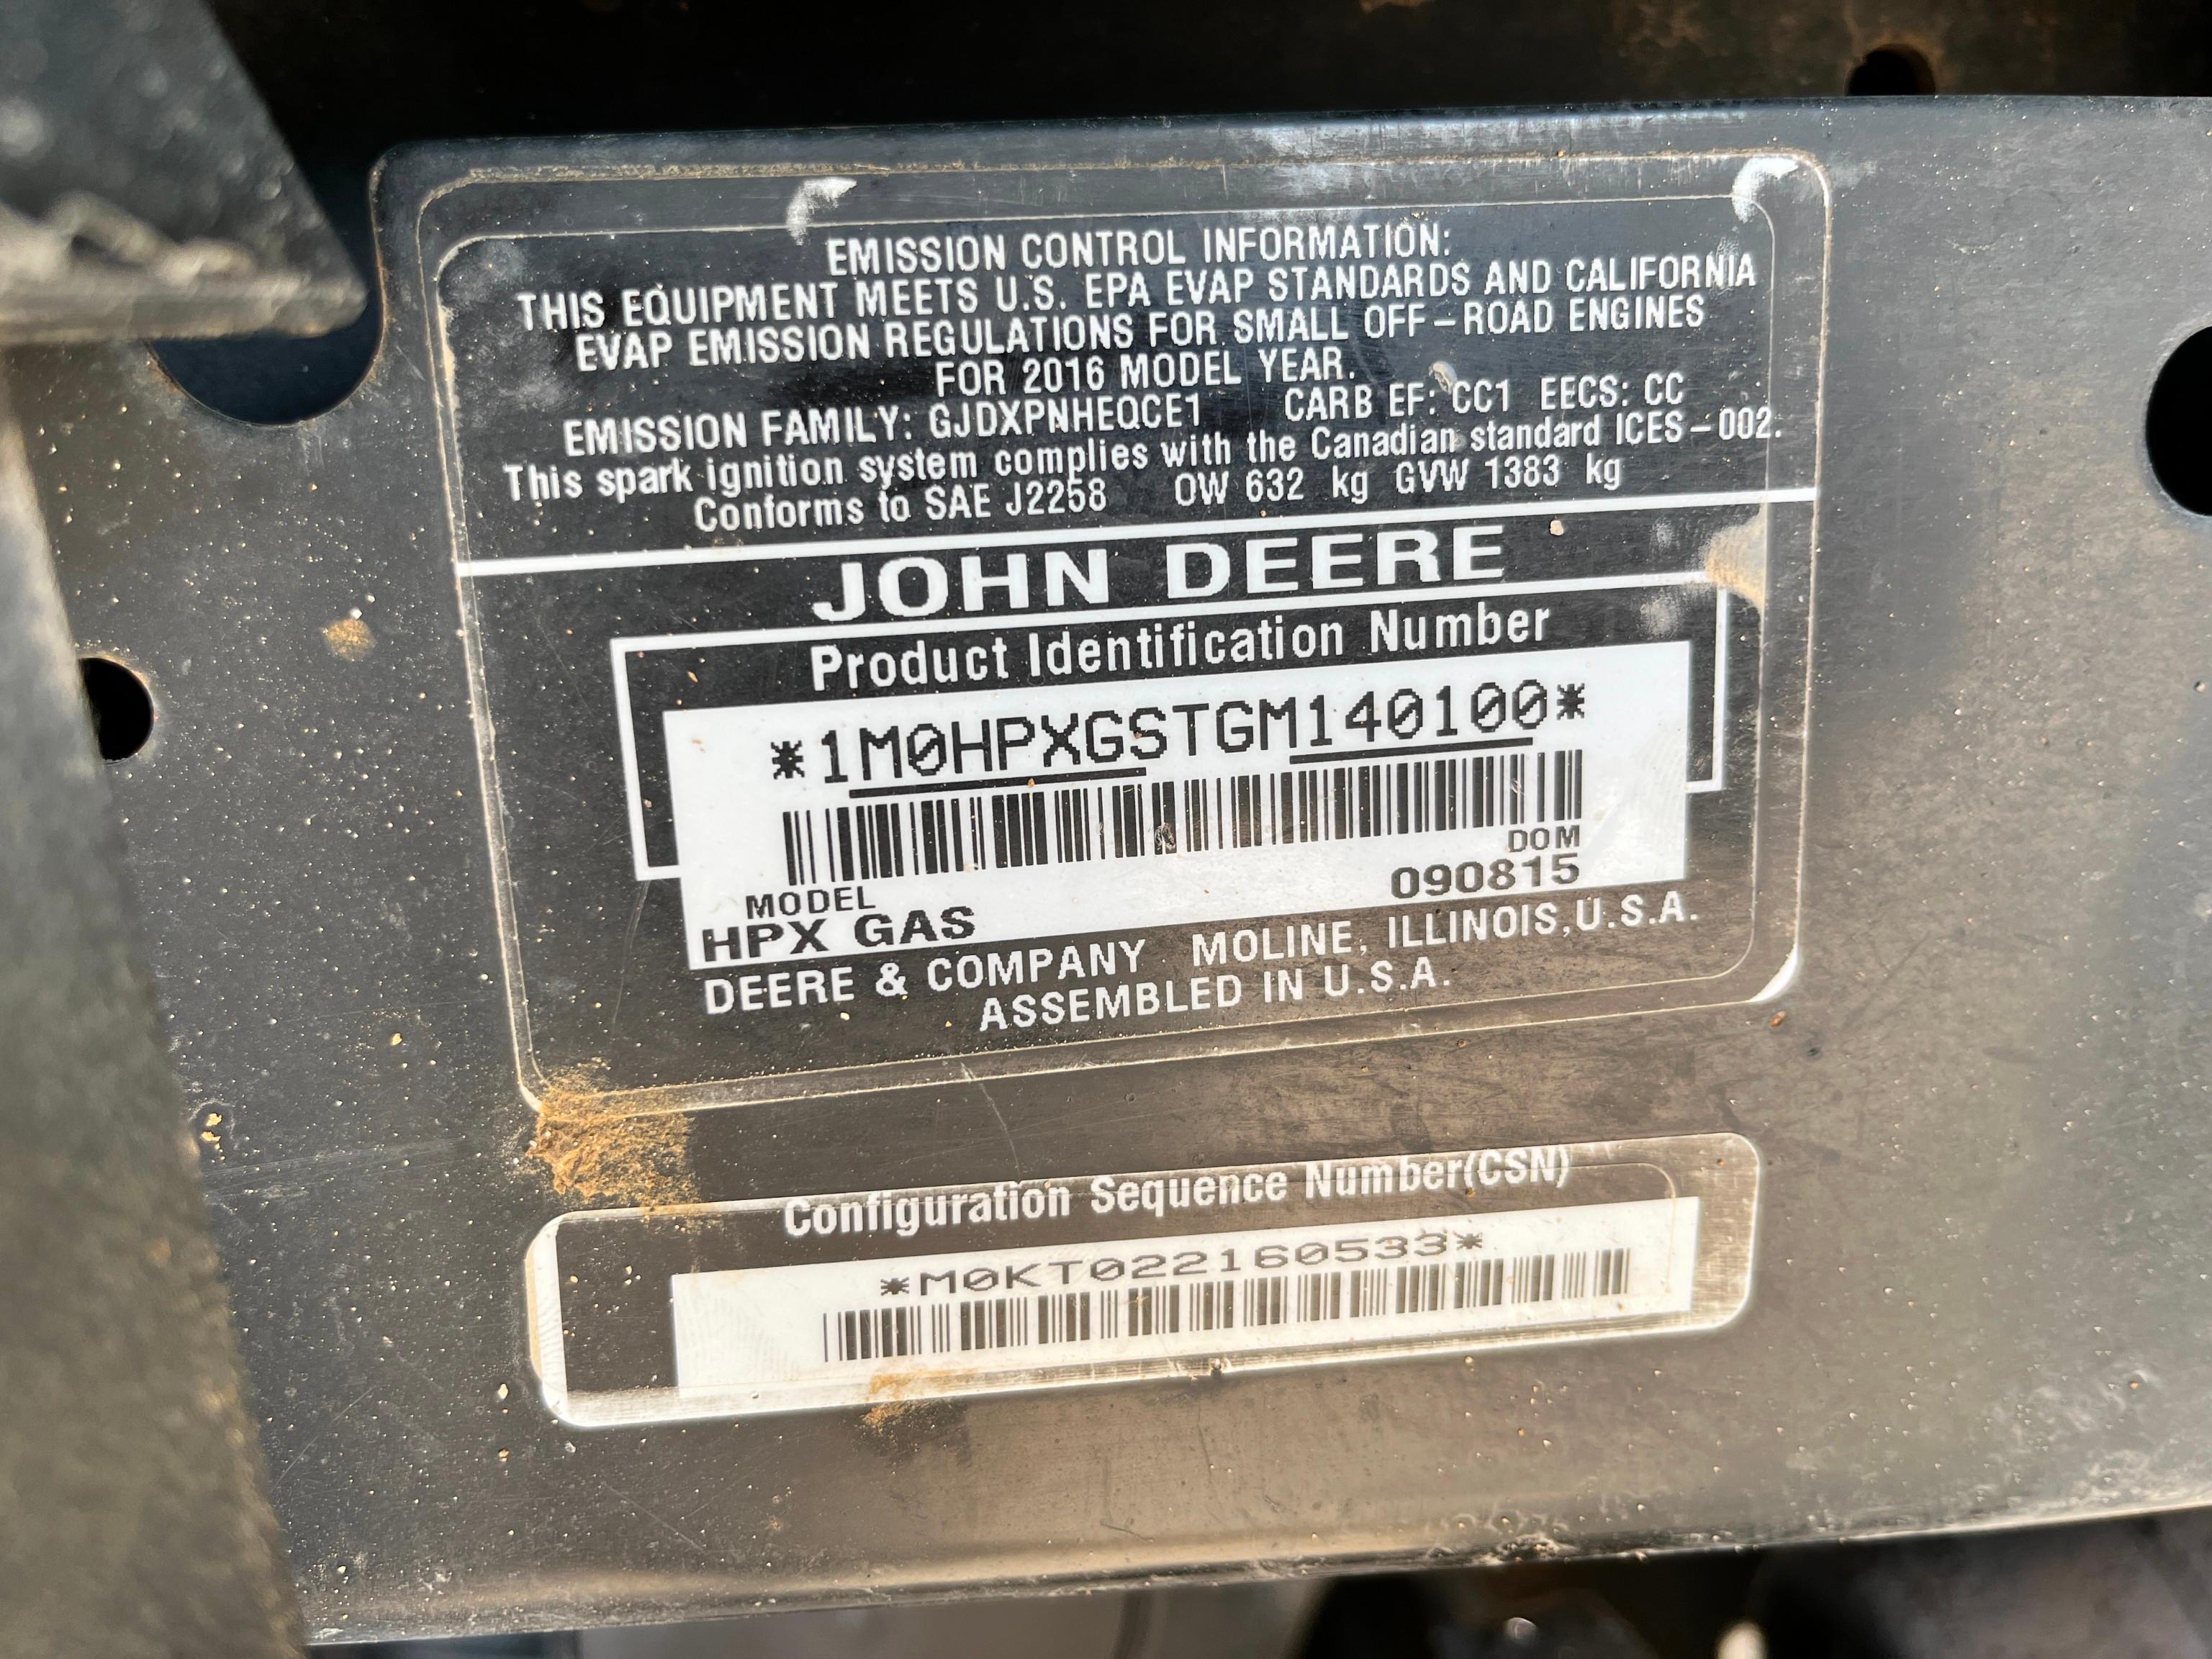 2016 JOHN DEERE GATOR HPX UTILITY VEHICLE VN:1M0HPXGSTGM140100 4x4, powered by gas engine, equipped